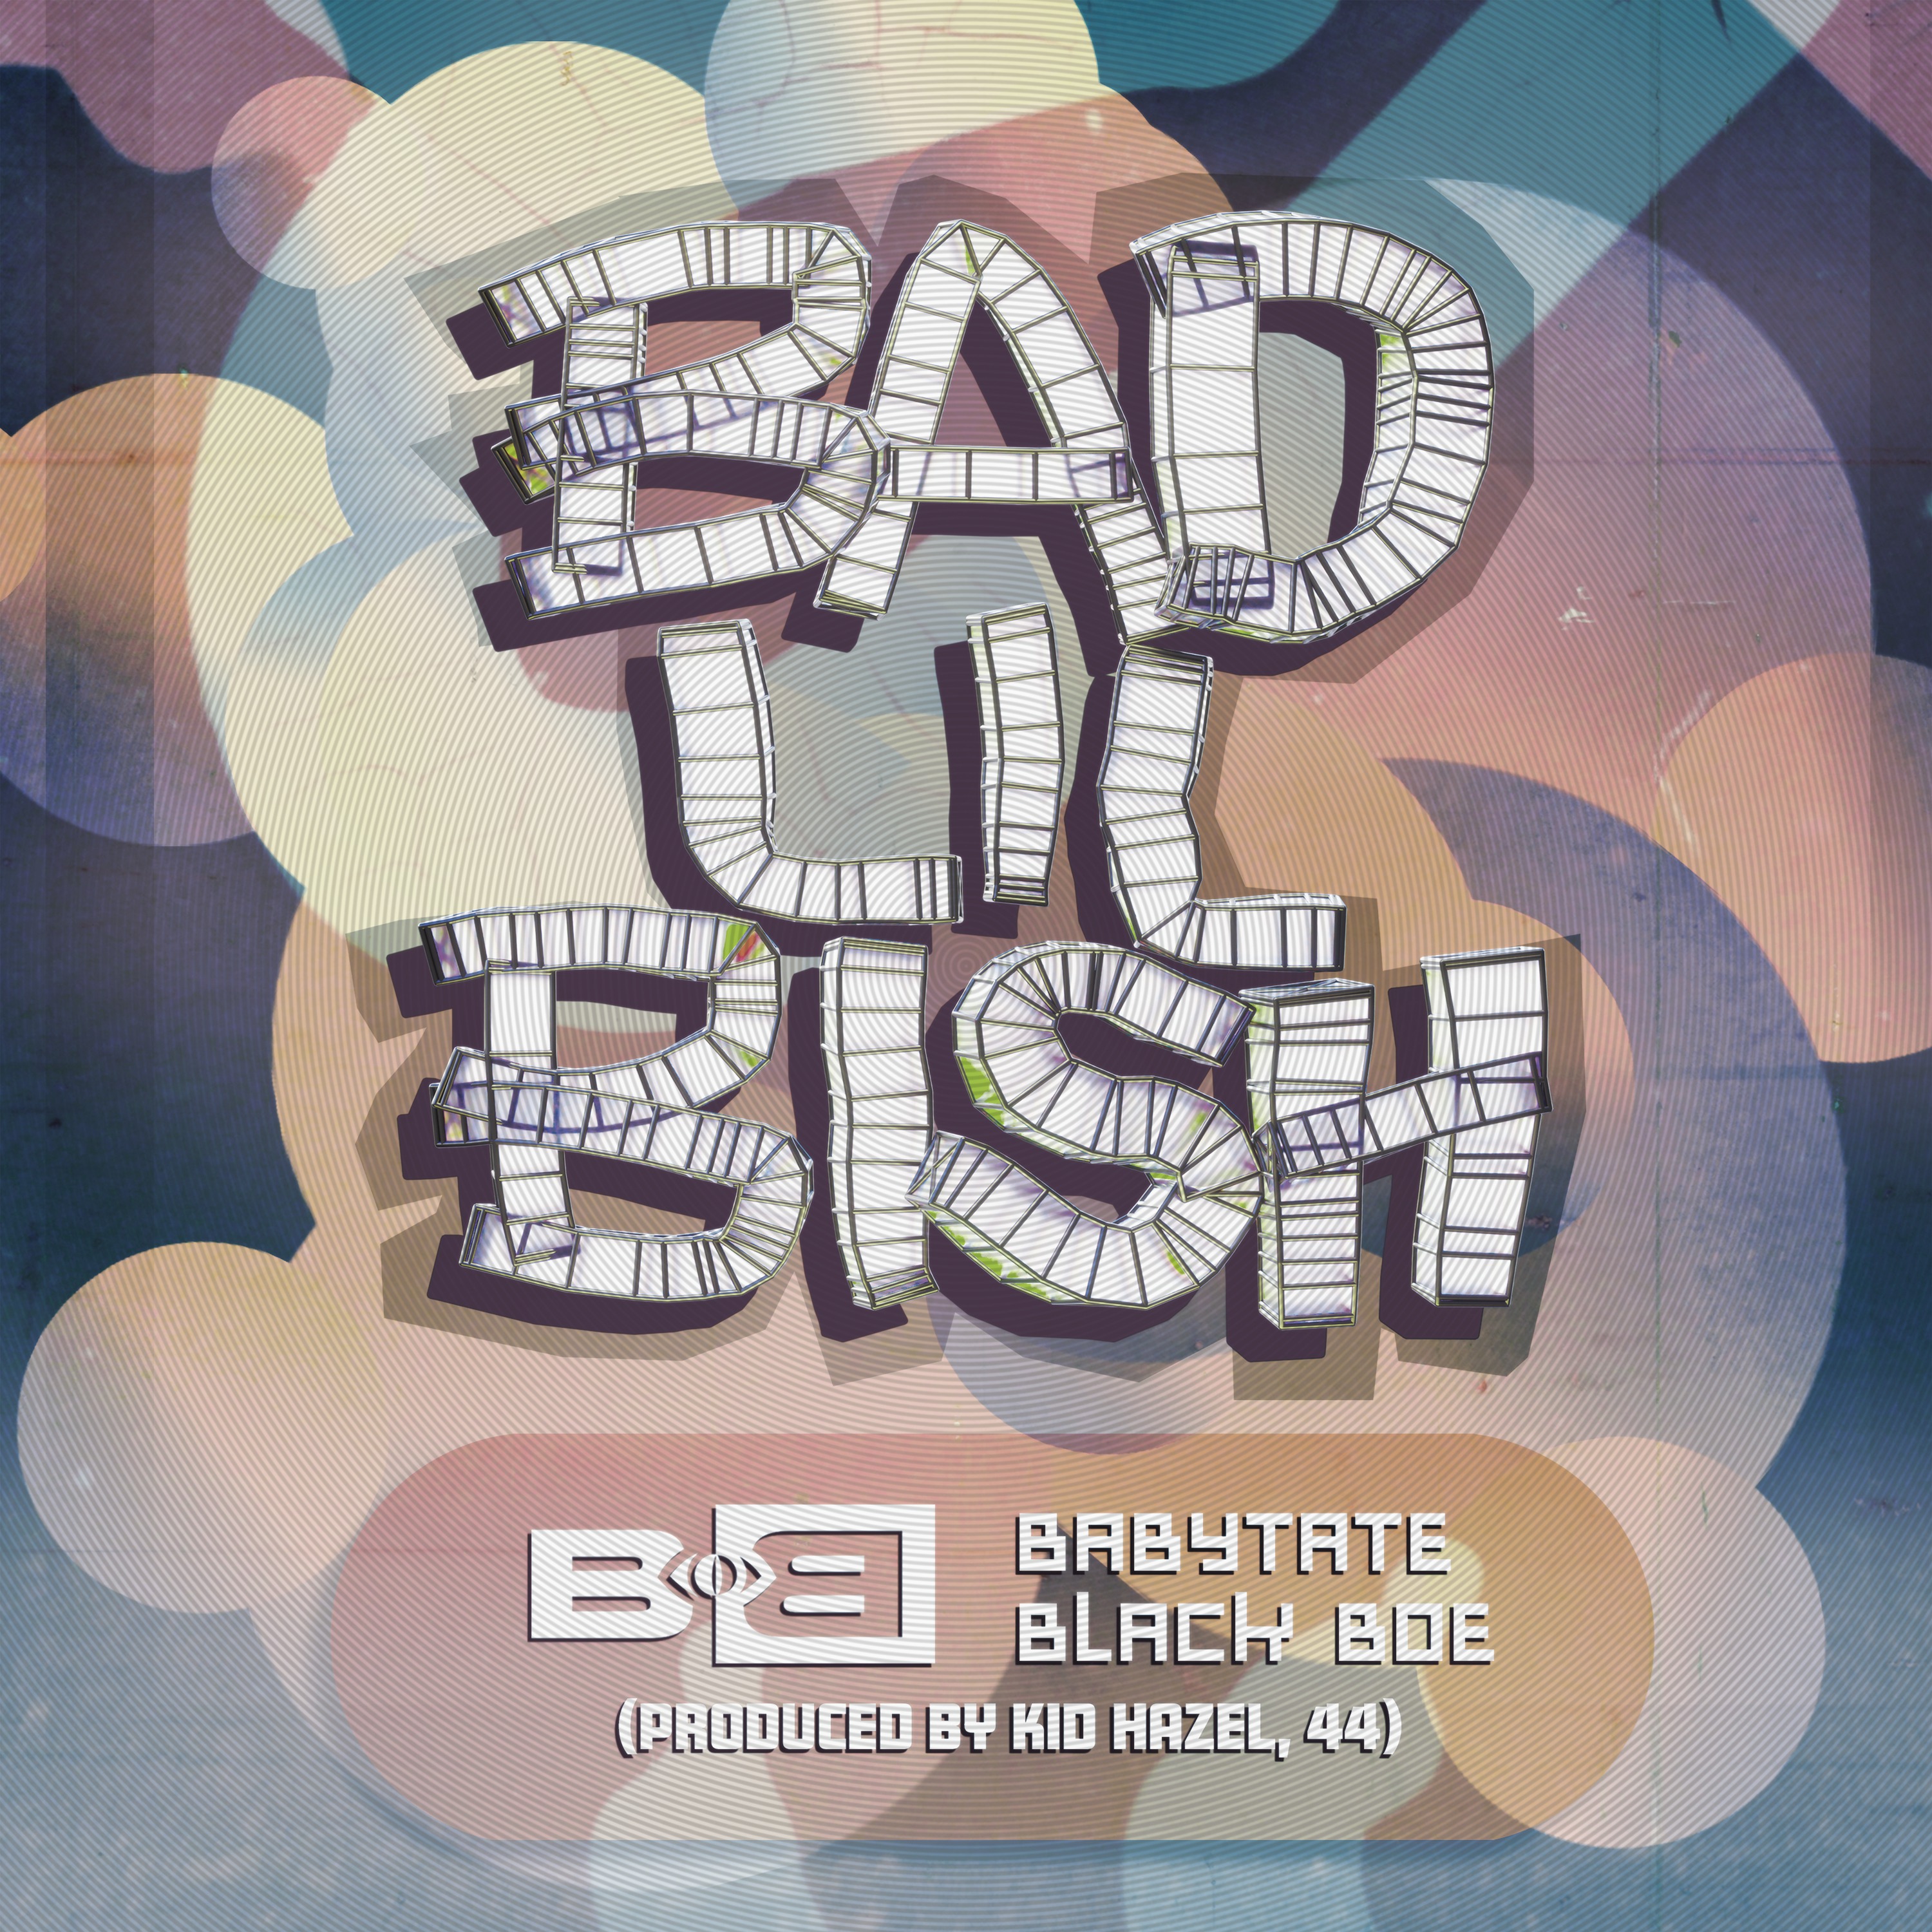 Art for b.o.b - bad lil bish ft babytate, black boe (clean) by Baby Tate & Black Boe